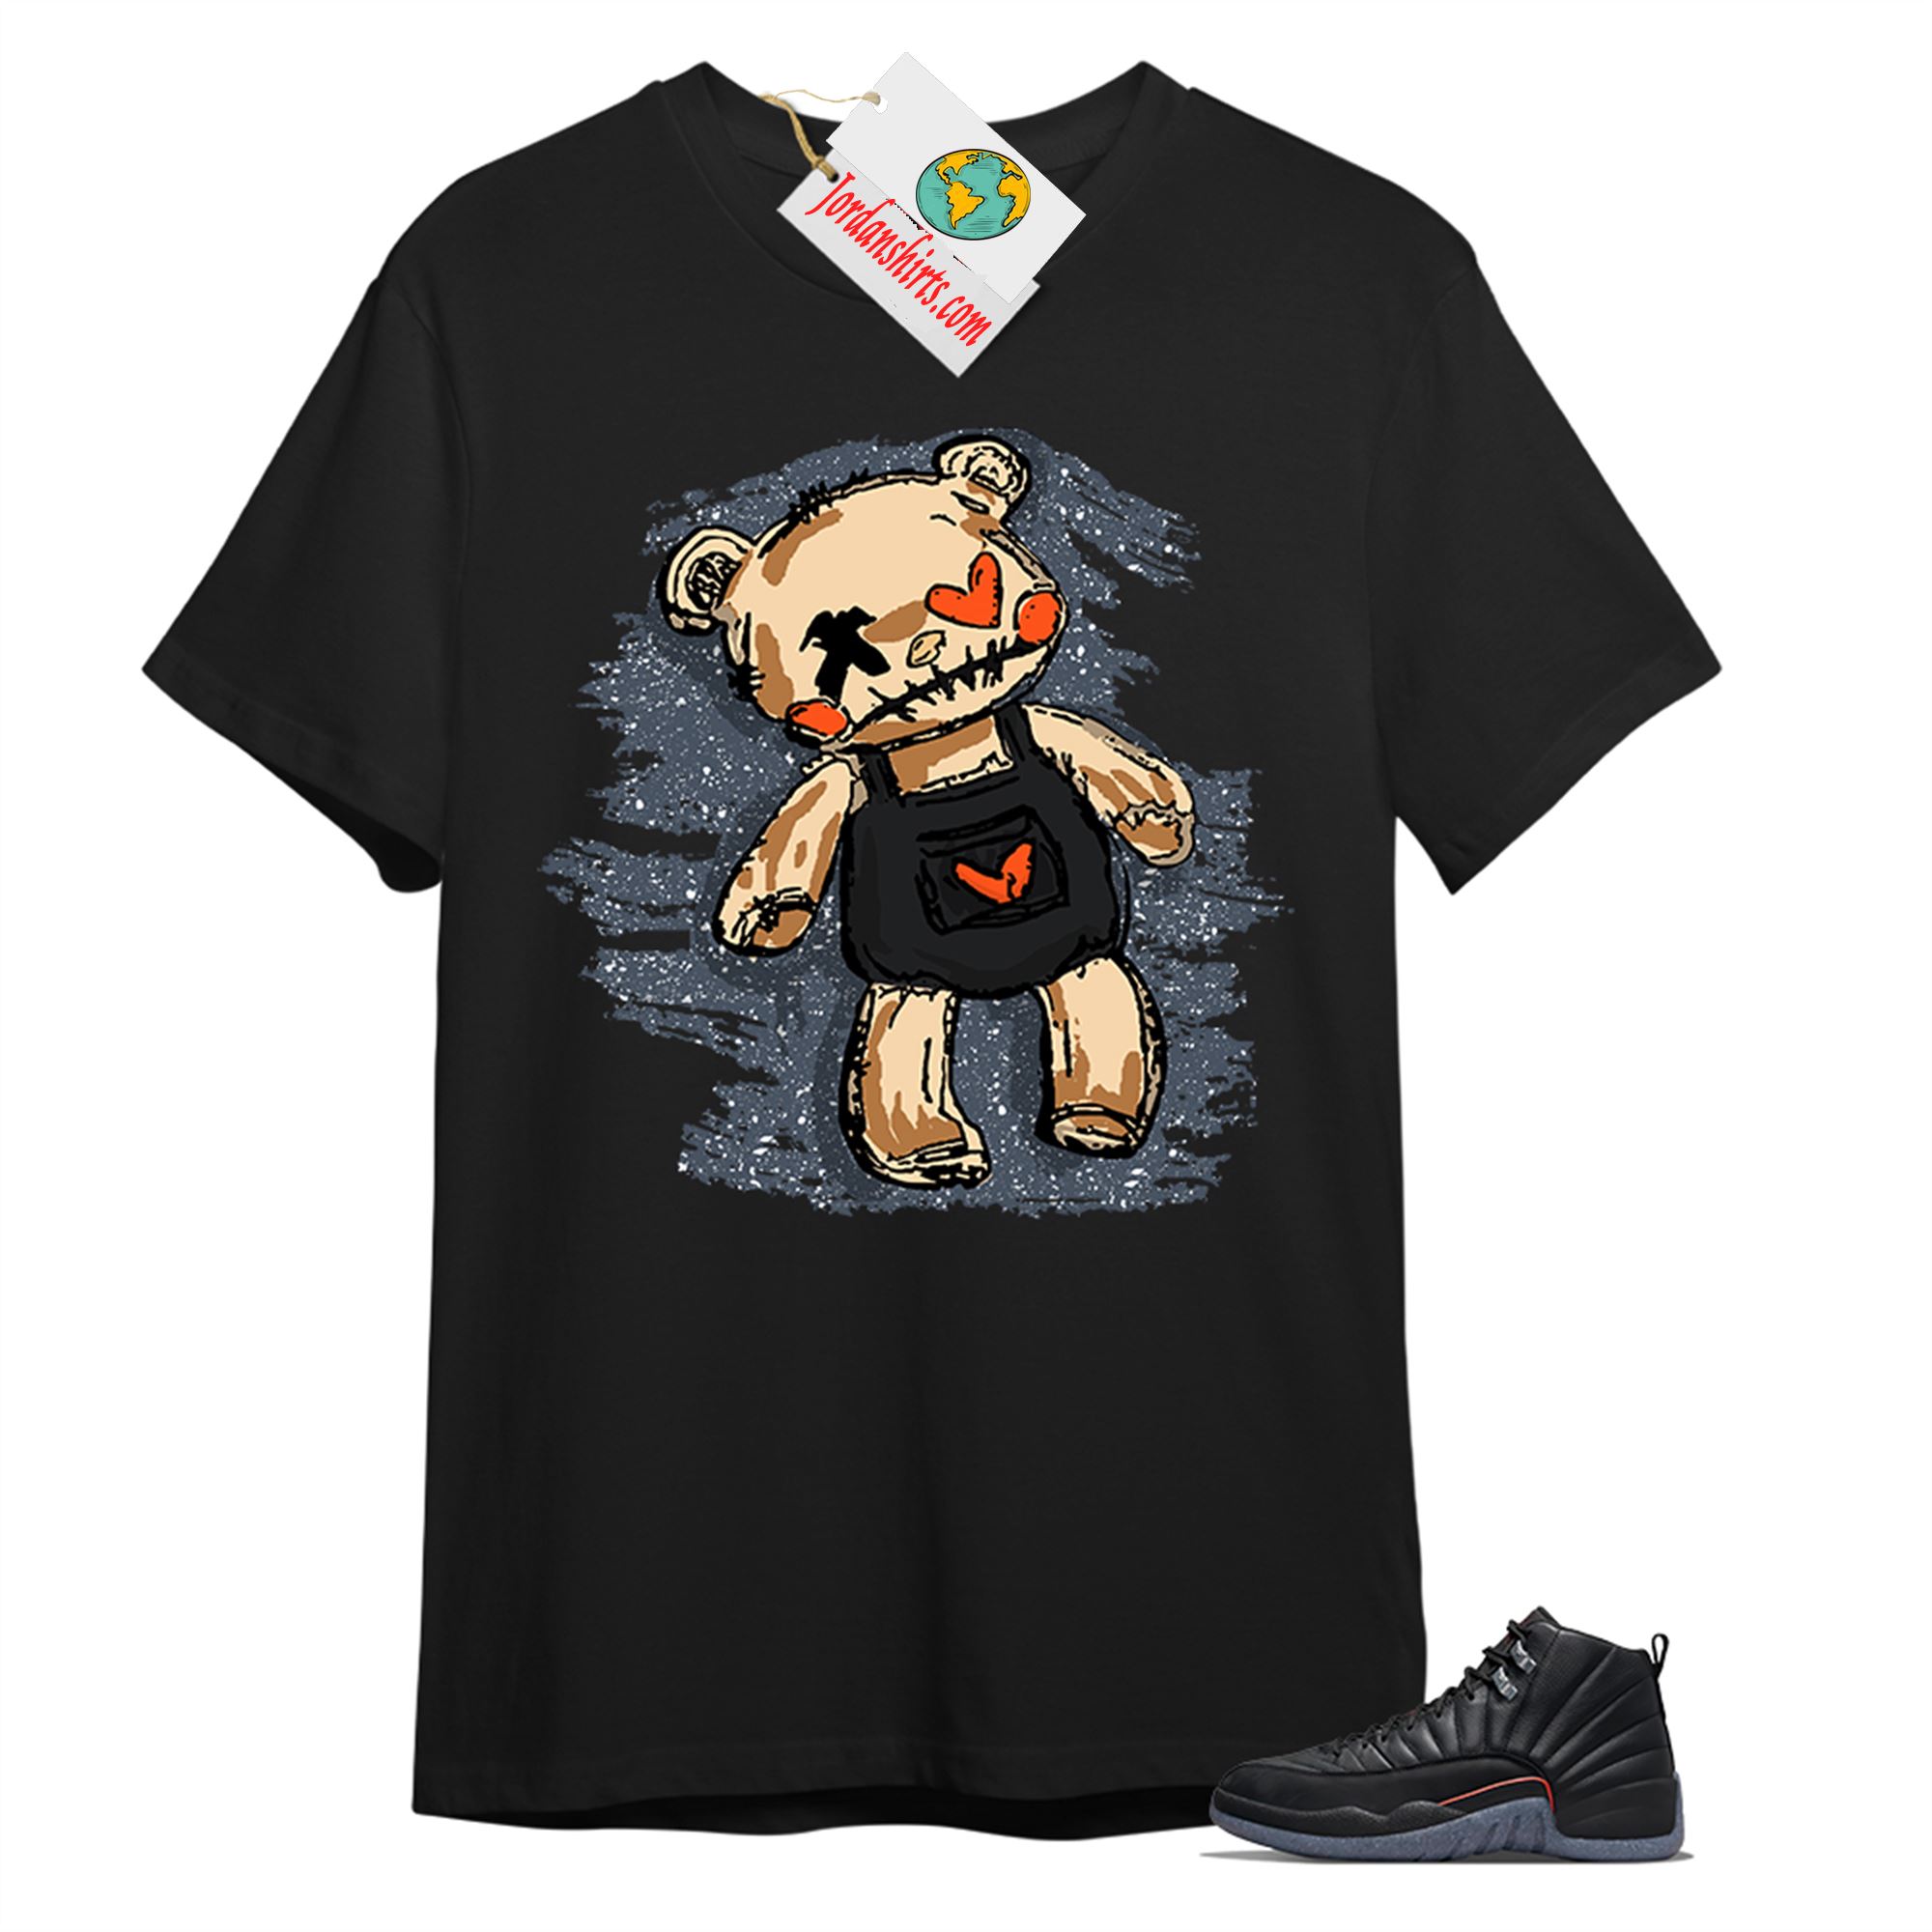 Jordan 12 Shirt, Teddy Bear Broken Heart Black T-shirt Air Jordan 12 Utility Grind 12s Size Up To 5xl